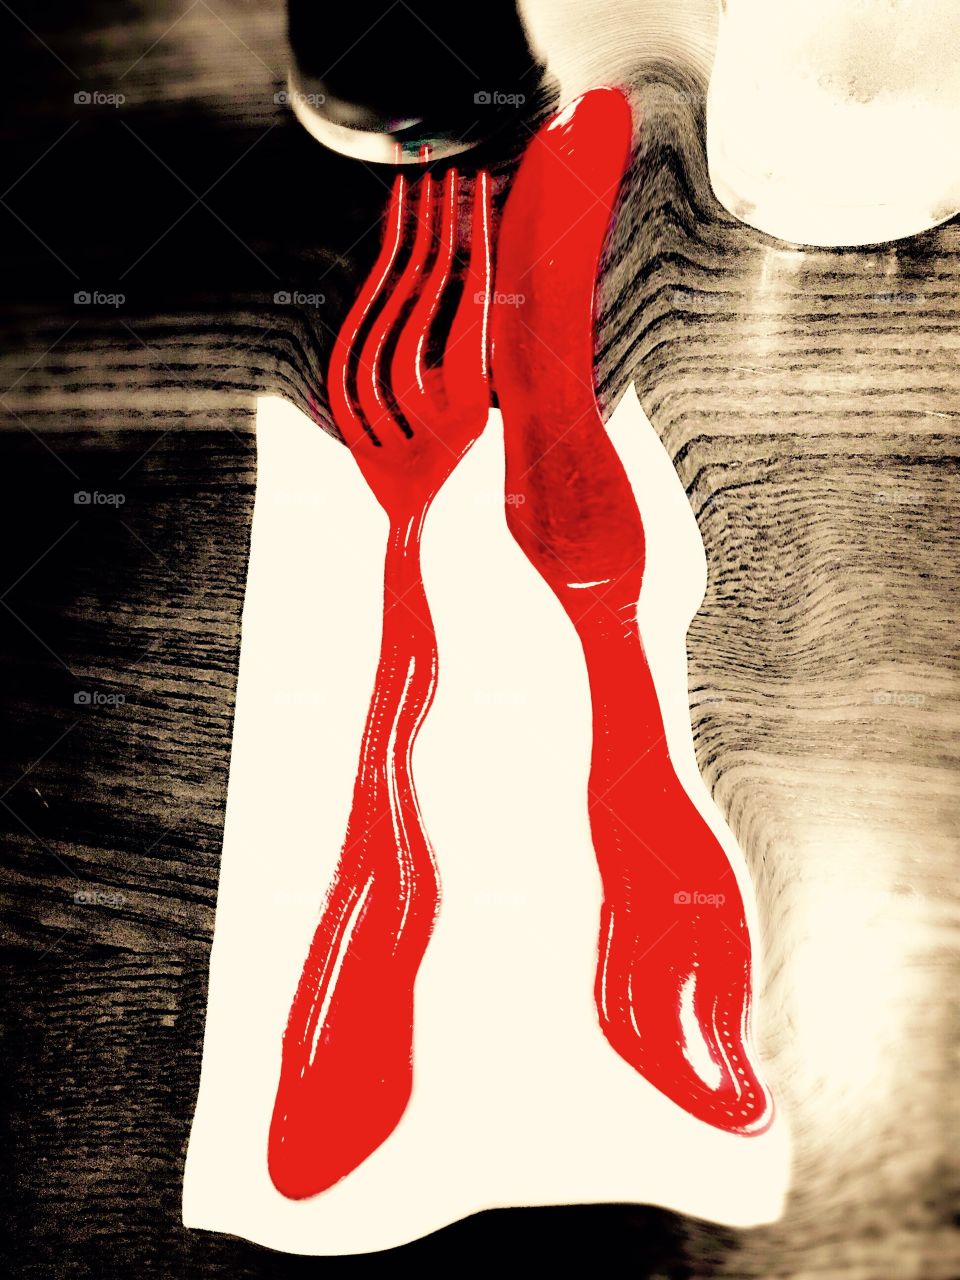 Warped knife and Fork. Warped red knife and fork